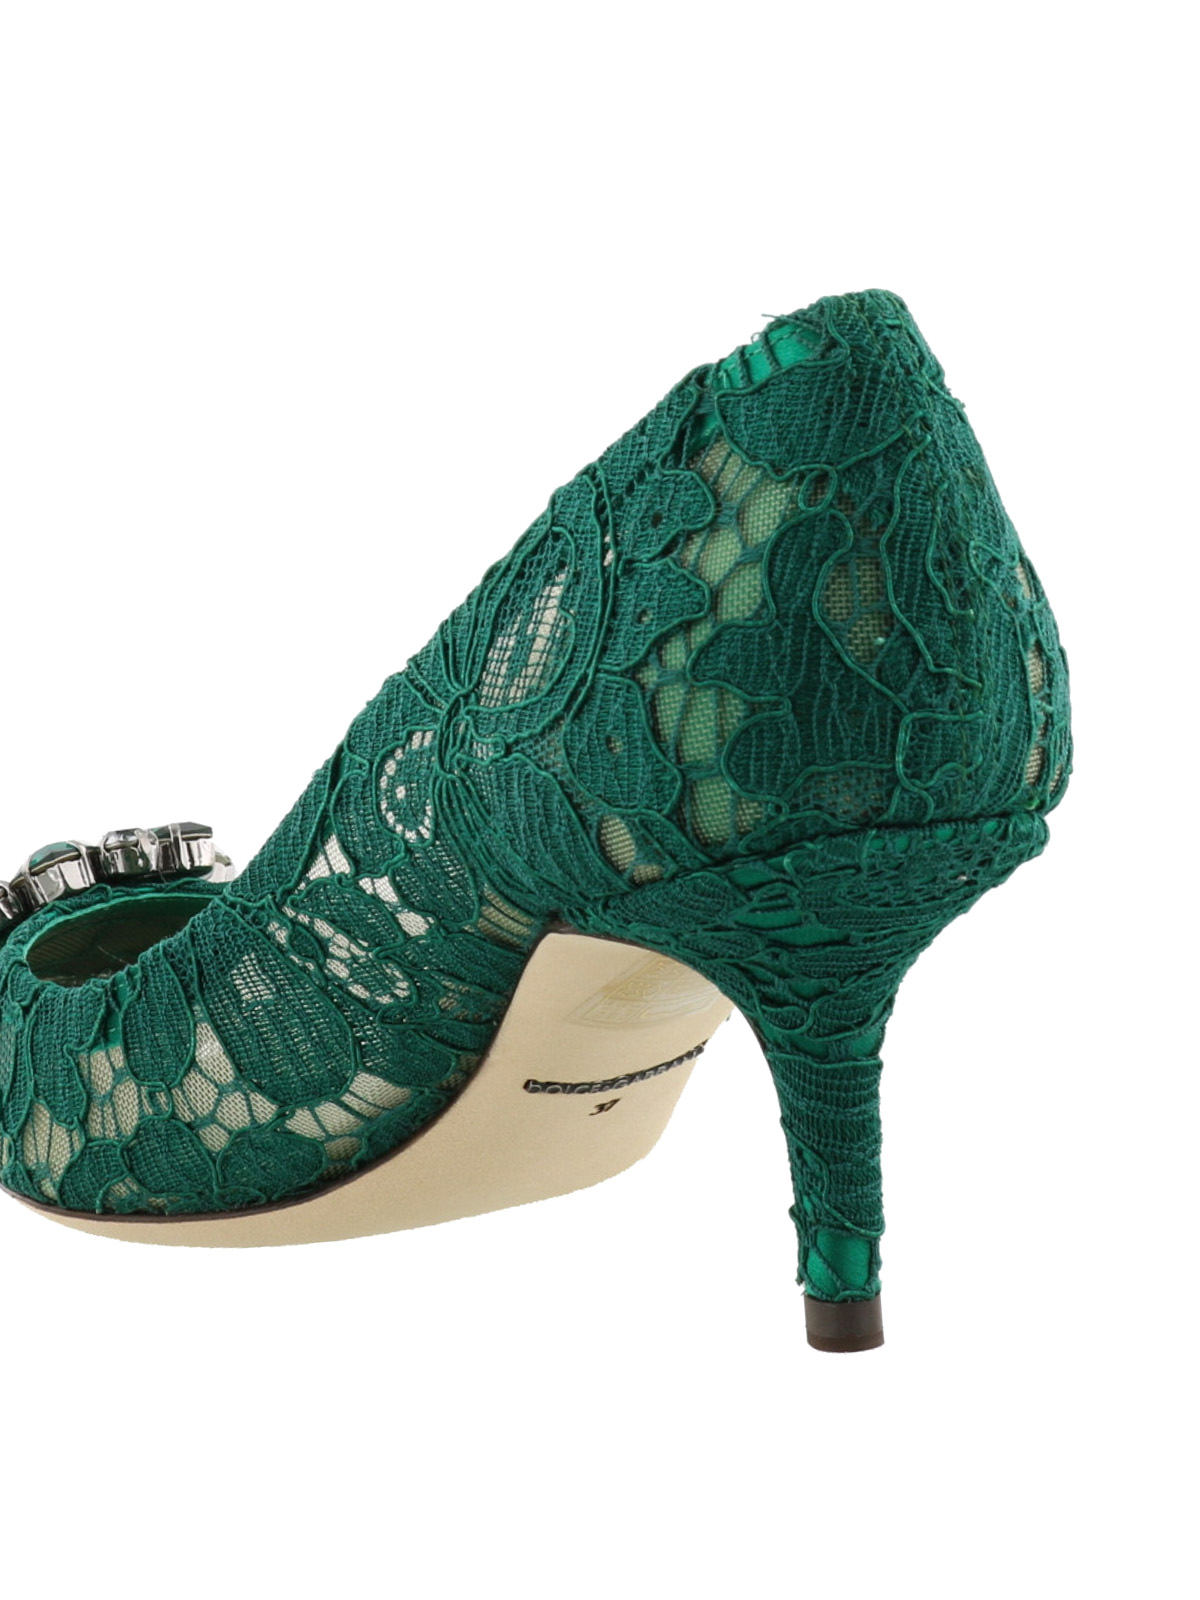 Shop Dolce & Gabbana Bellucci Green Lace Jewel Pumps